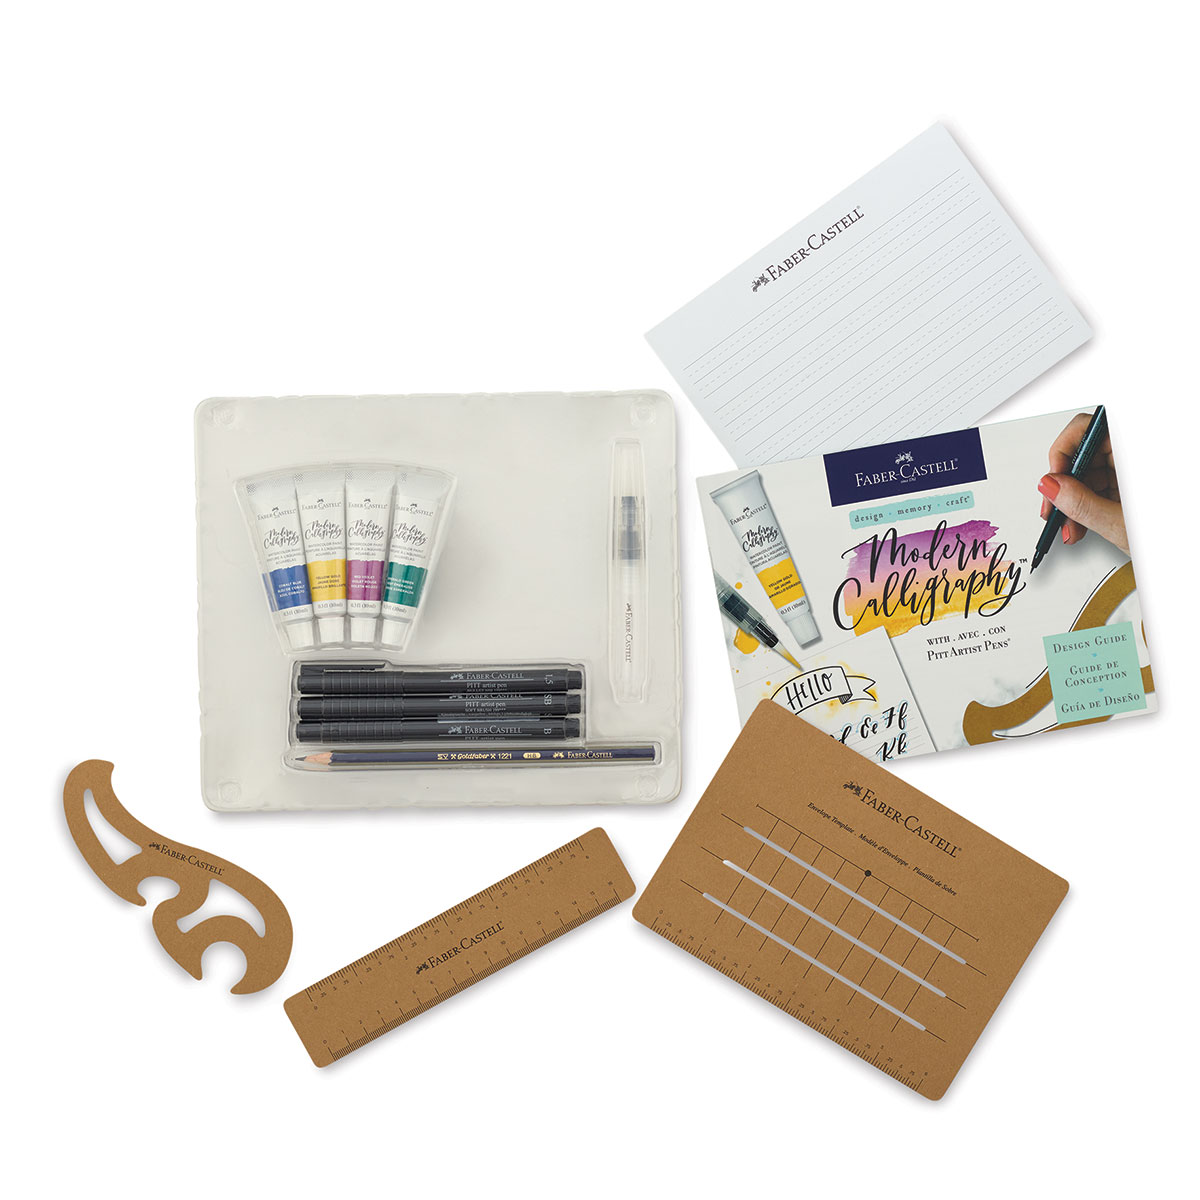 FaberCastell Creative Lettering Kit 